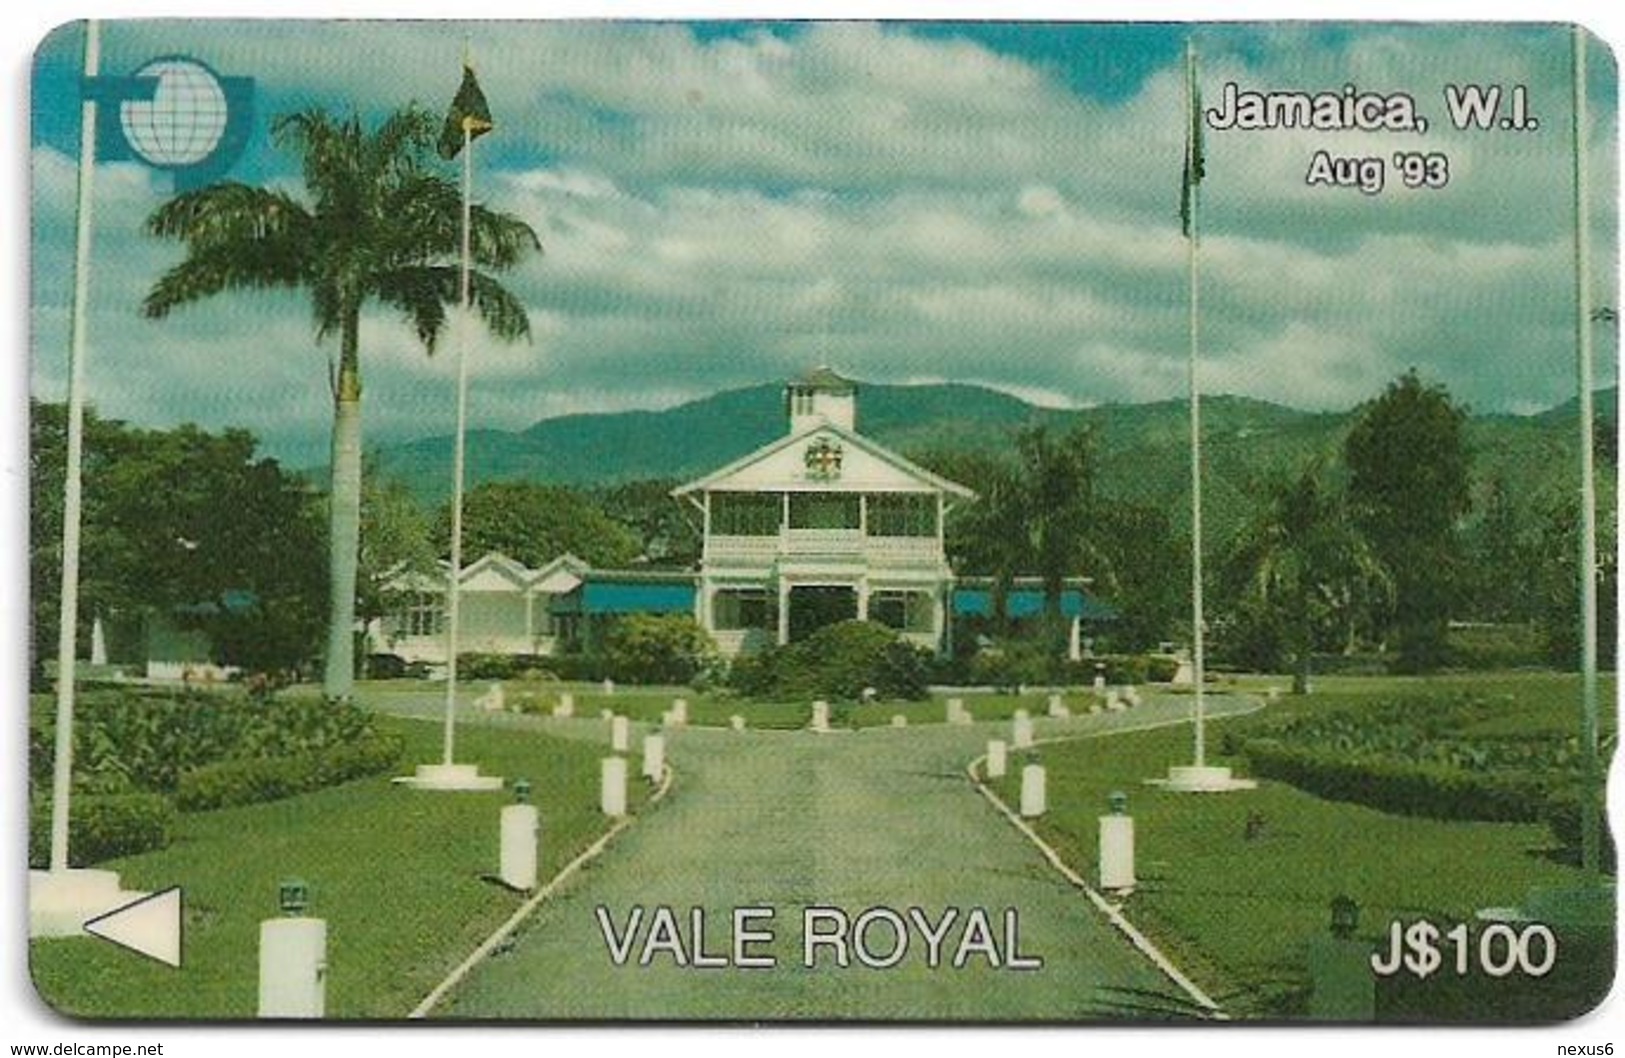 Jamaica - C&W - Vale Royal, 15JAMA, 100J$, 1993, Used - Jamaïque